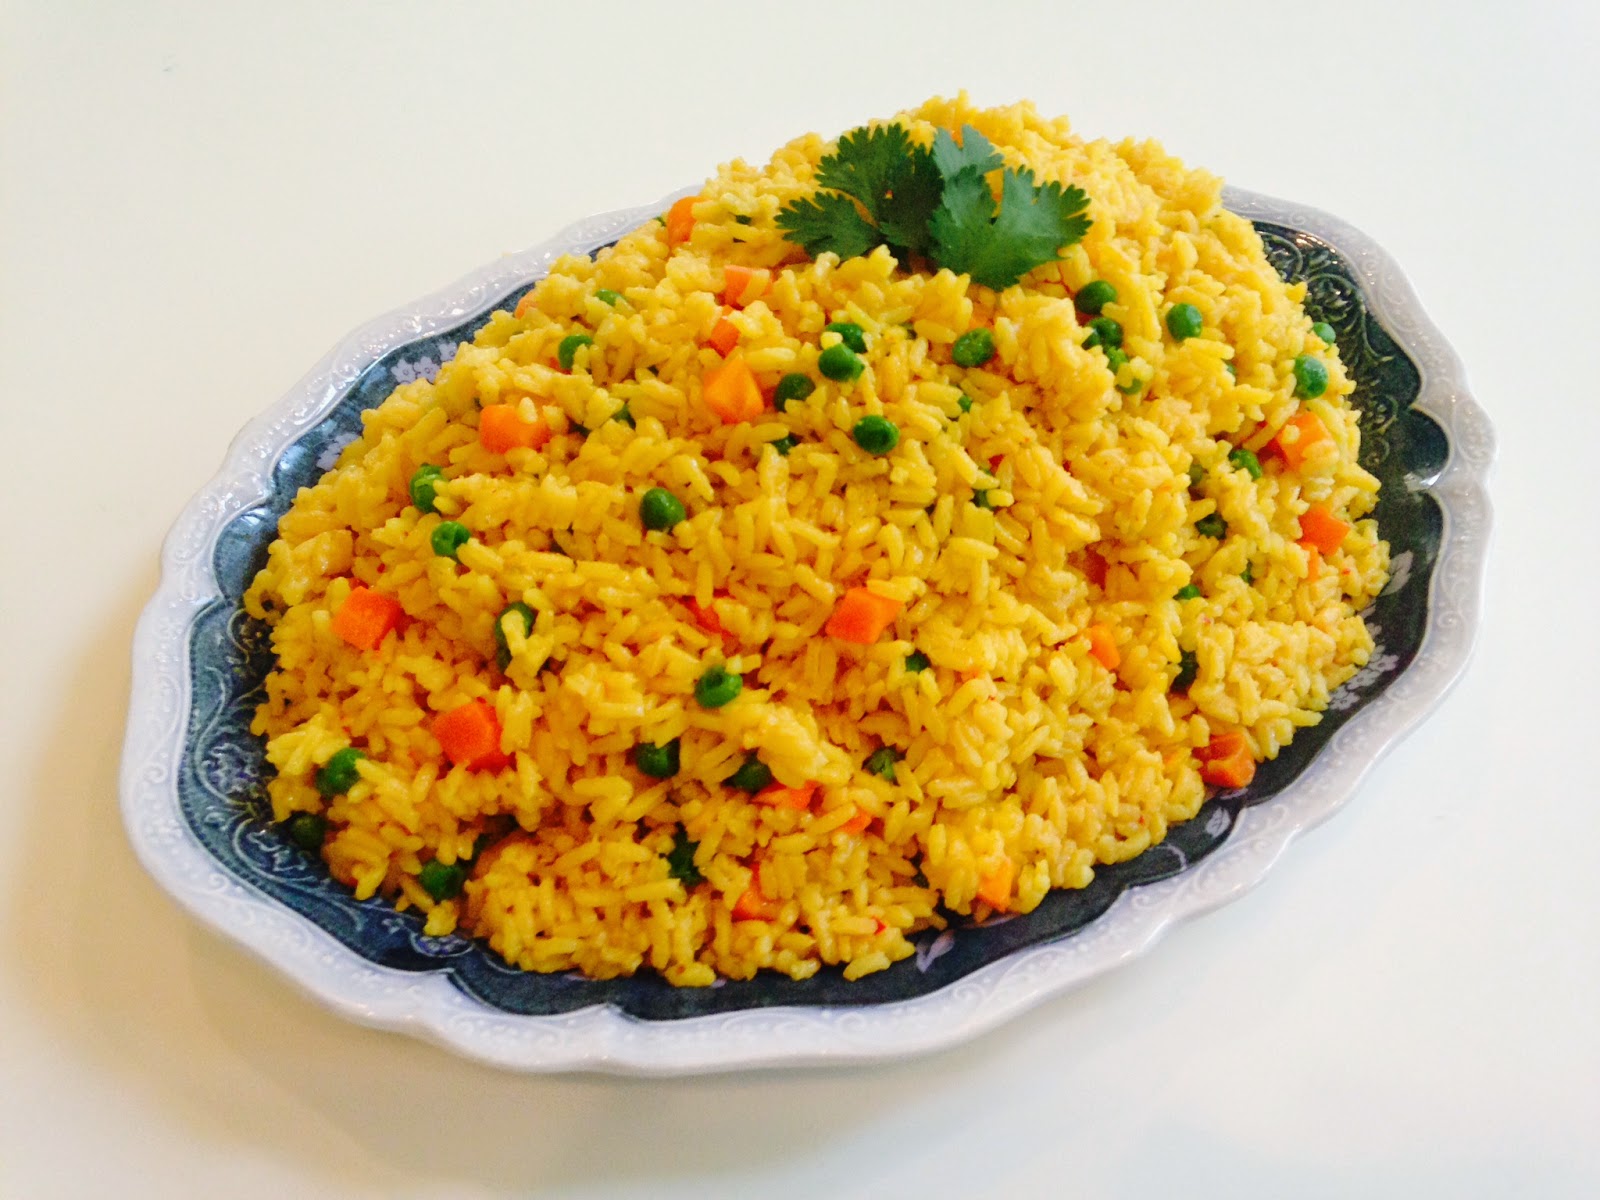 Sofie's Kitchen: Cinco De Mayo Vegetarian Yellow Rice with Vegetables